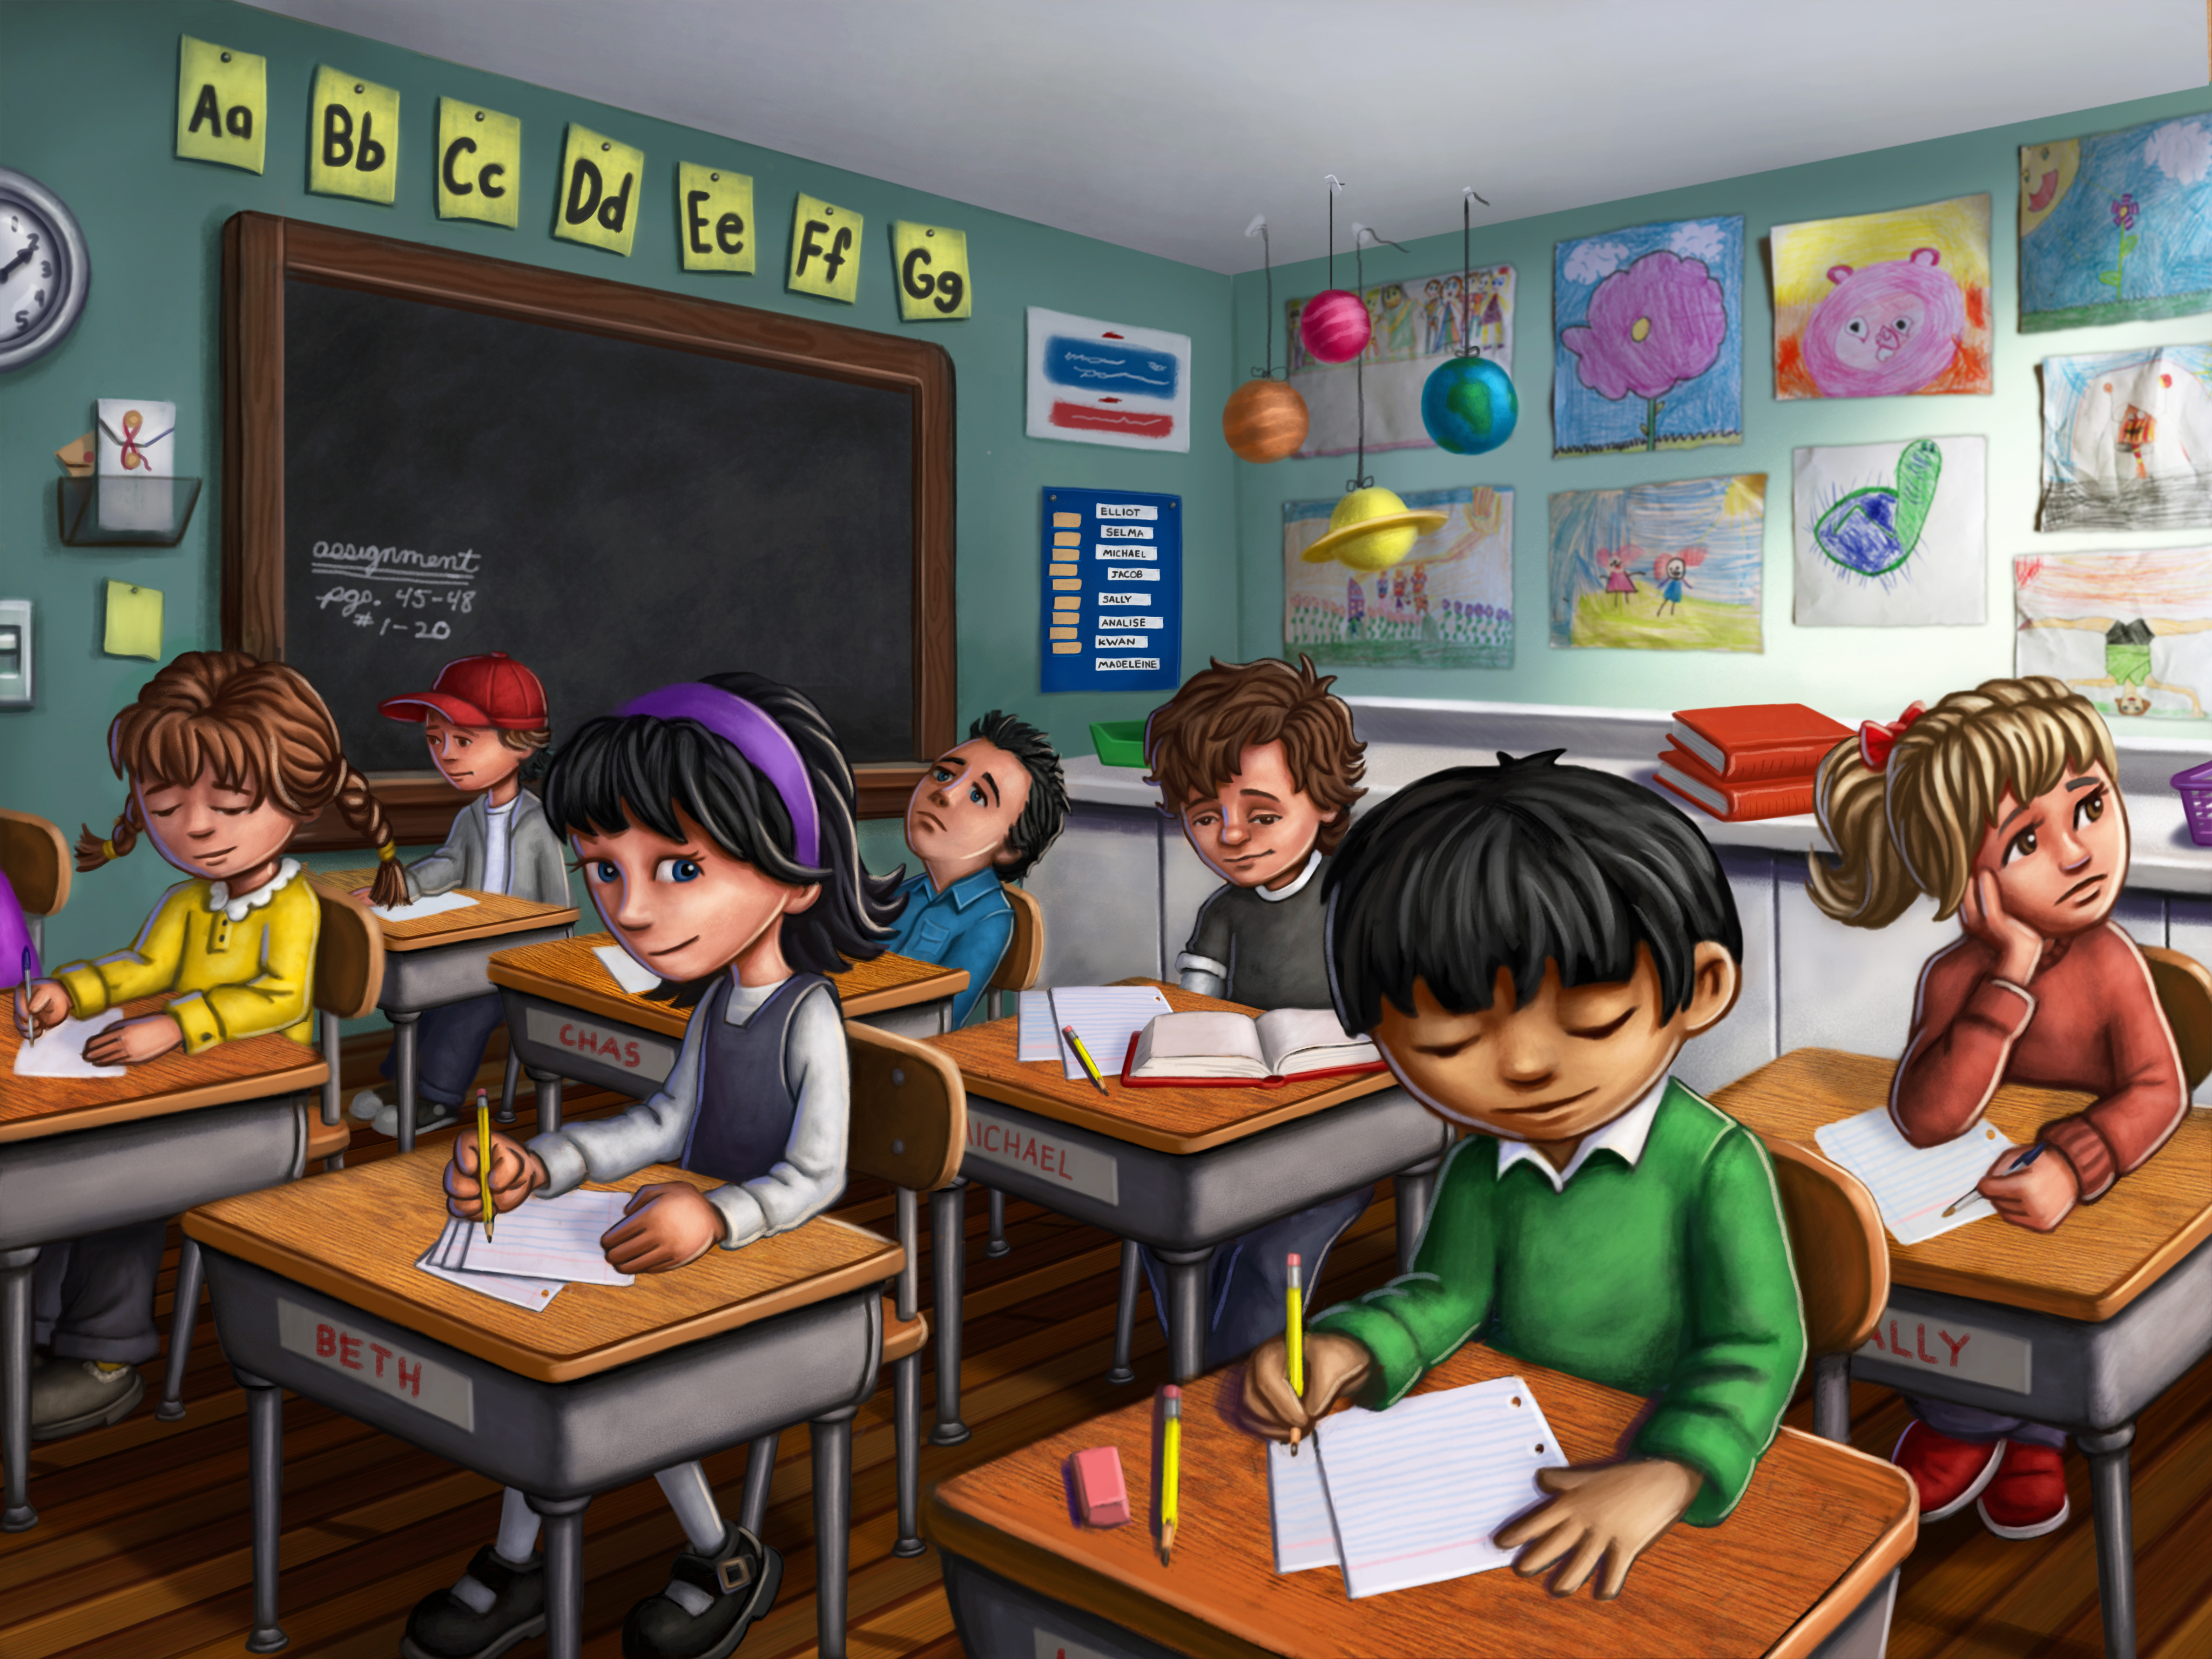 Free Classroom Cliparts, Download Free Clip Art, Free Clip